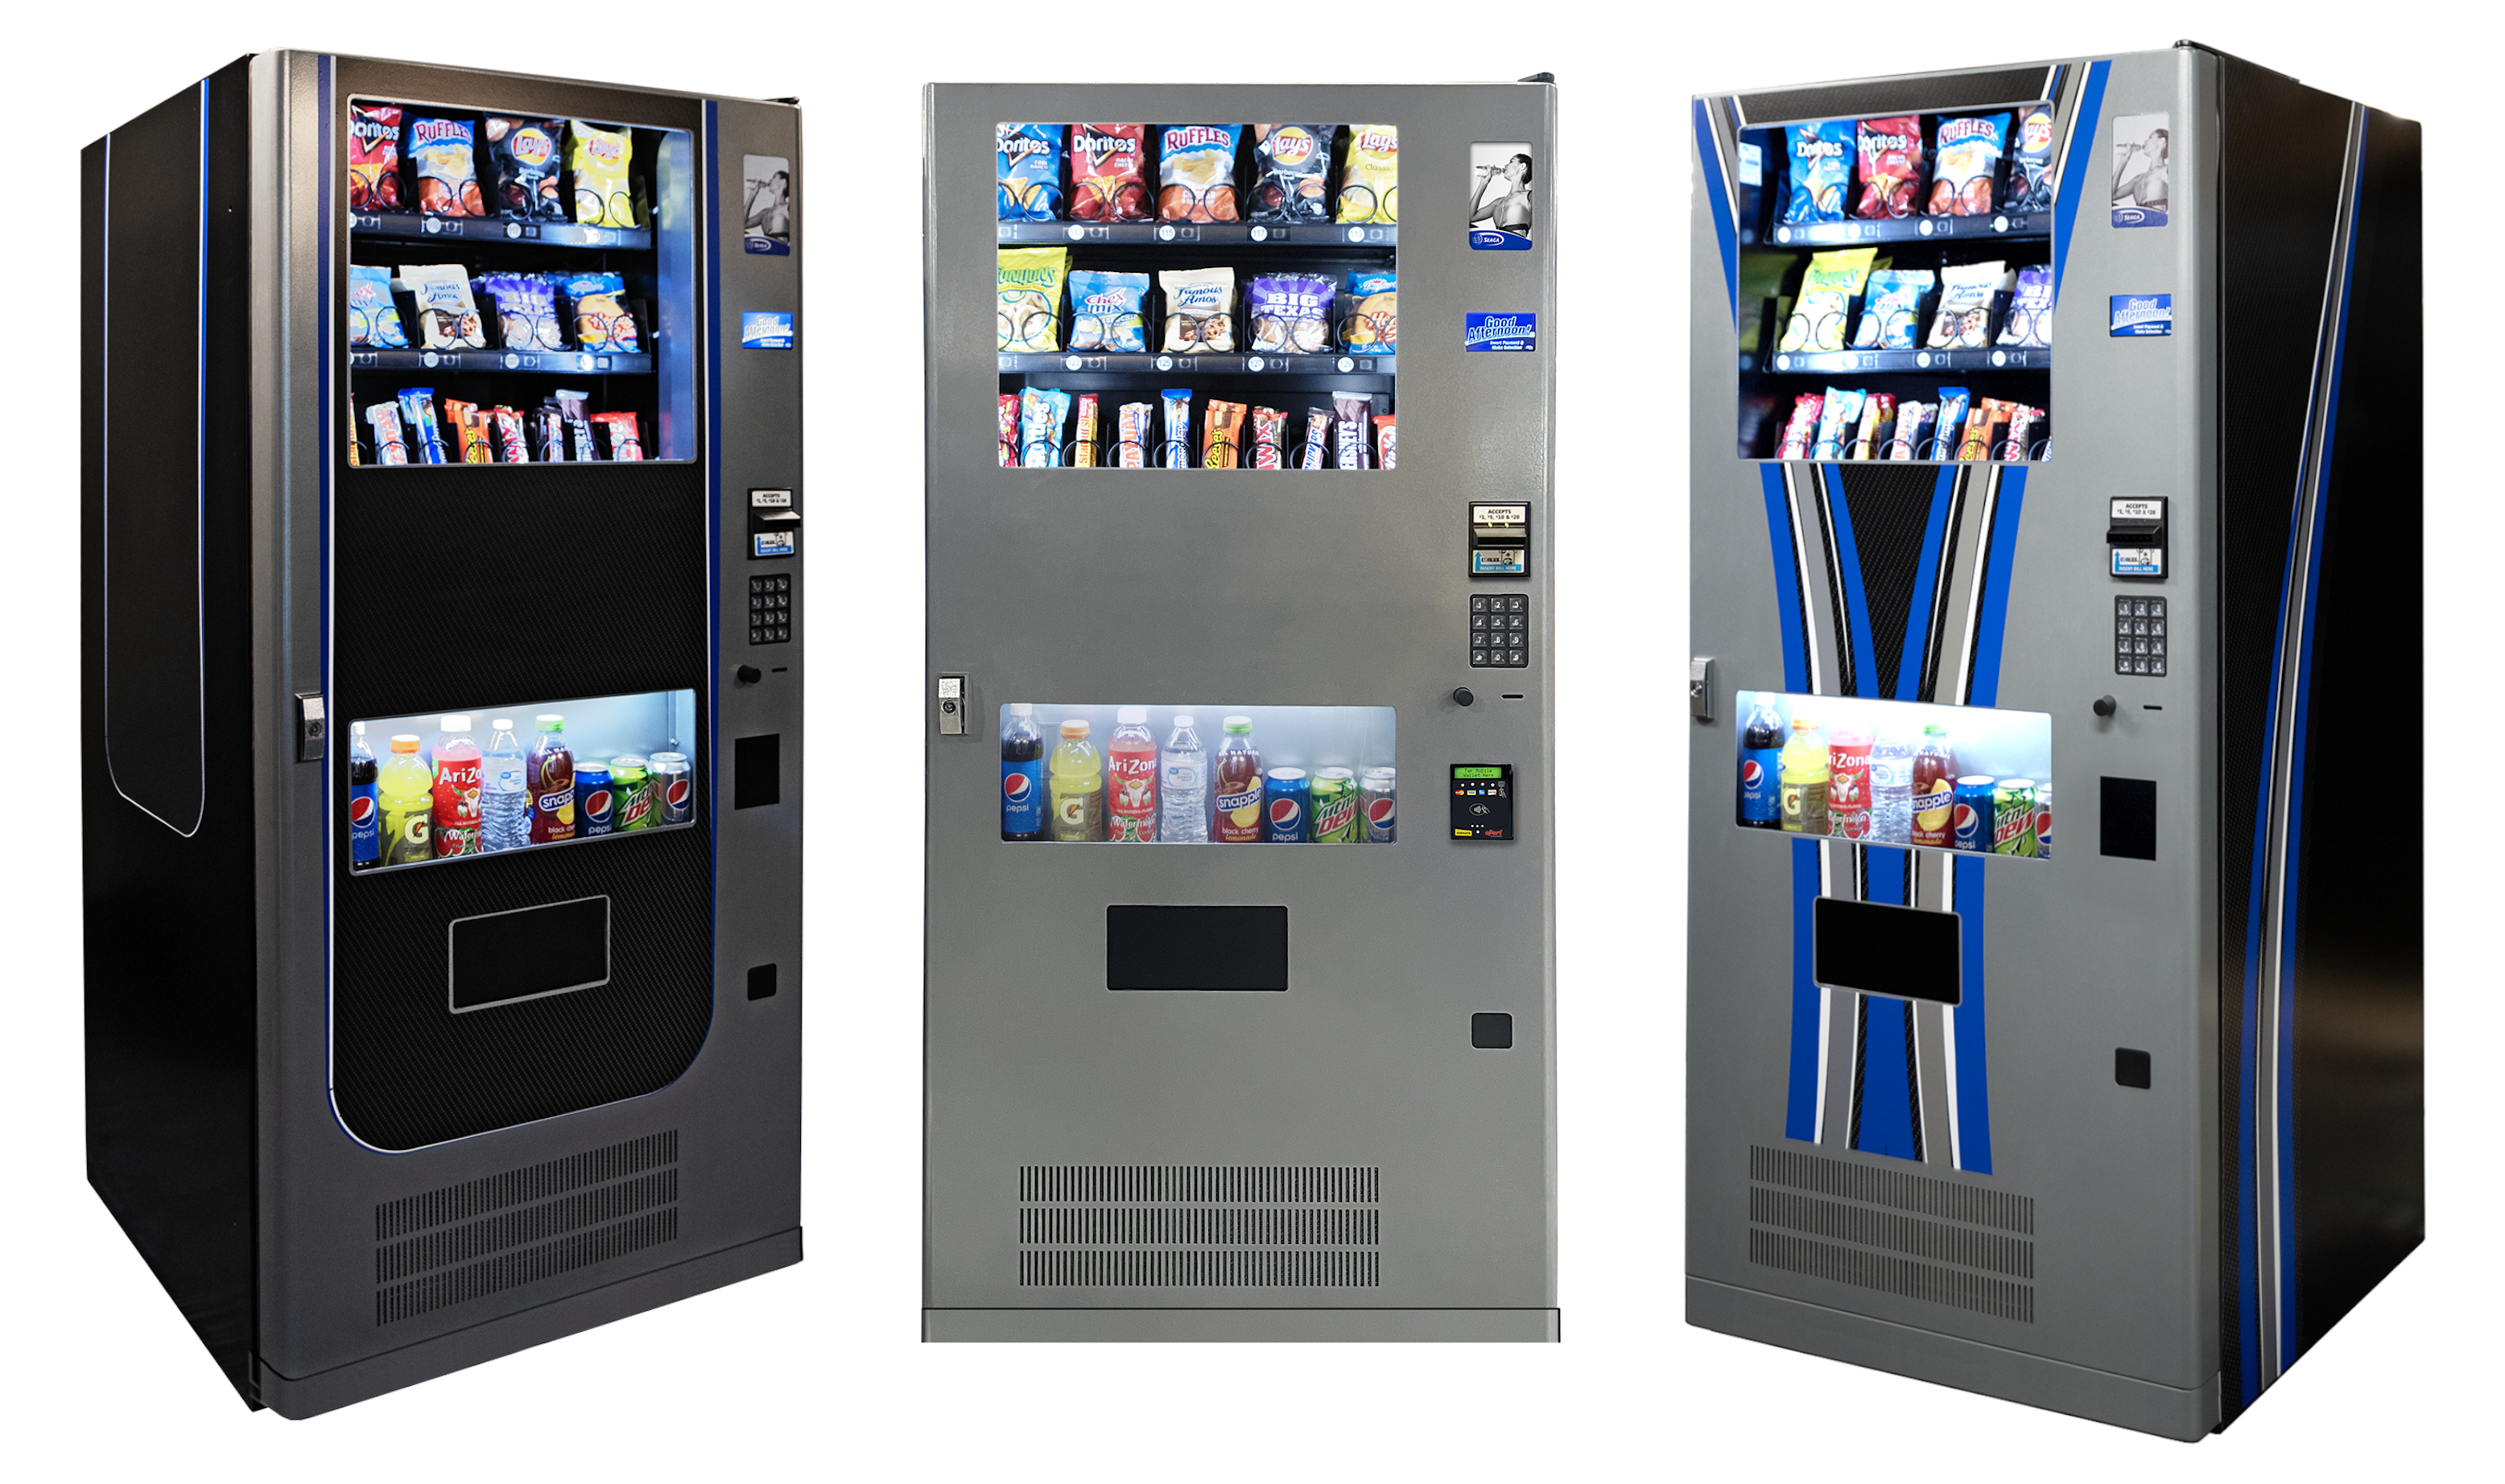 QB400 Quick Break Seaga Snack and Drink Combo Vending Machine Graphic Options